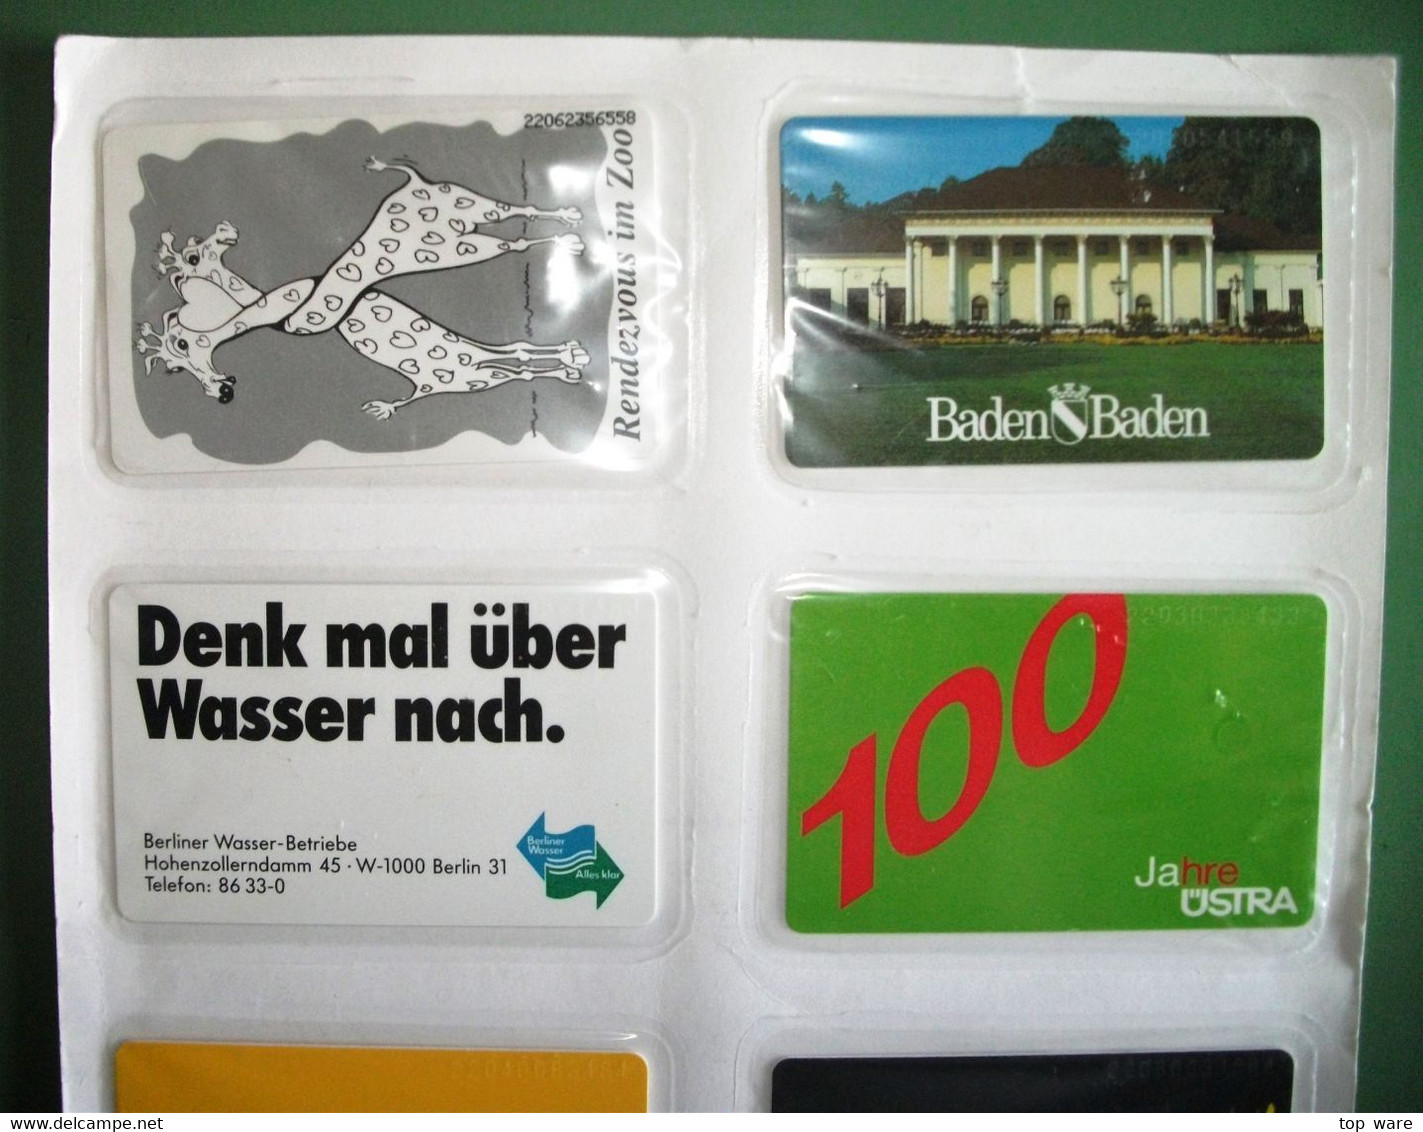 8 Telefonkarten Aus 1992 - S41 S44 S45 S47 S48 S49 S52 S57  - Original Verschweißt Vom Zentralen Kartenservice - Collections